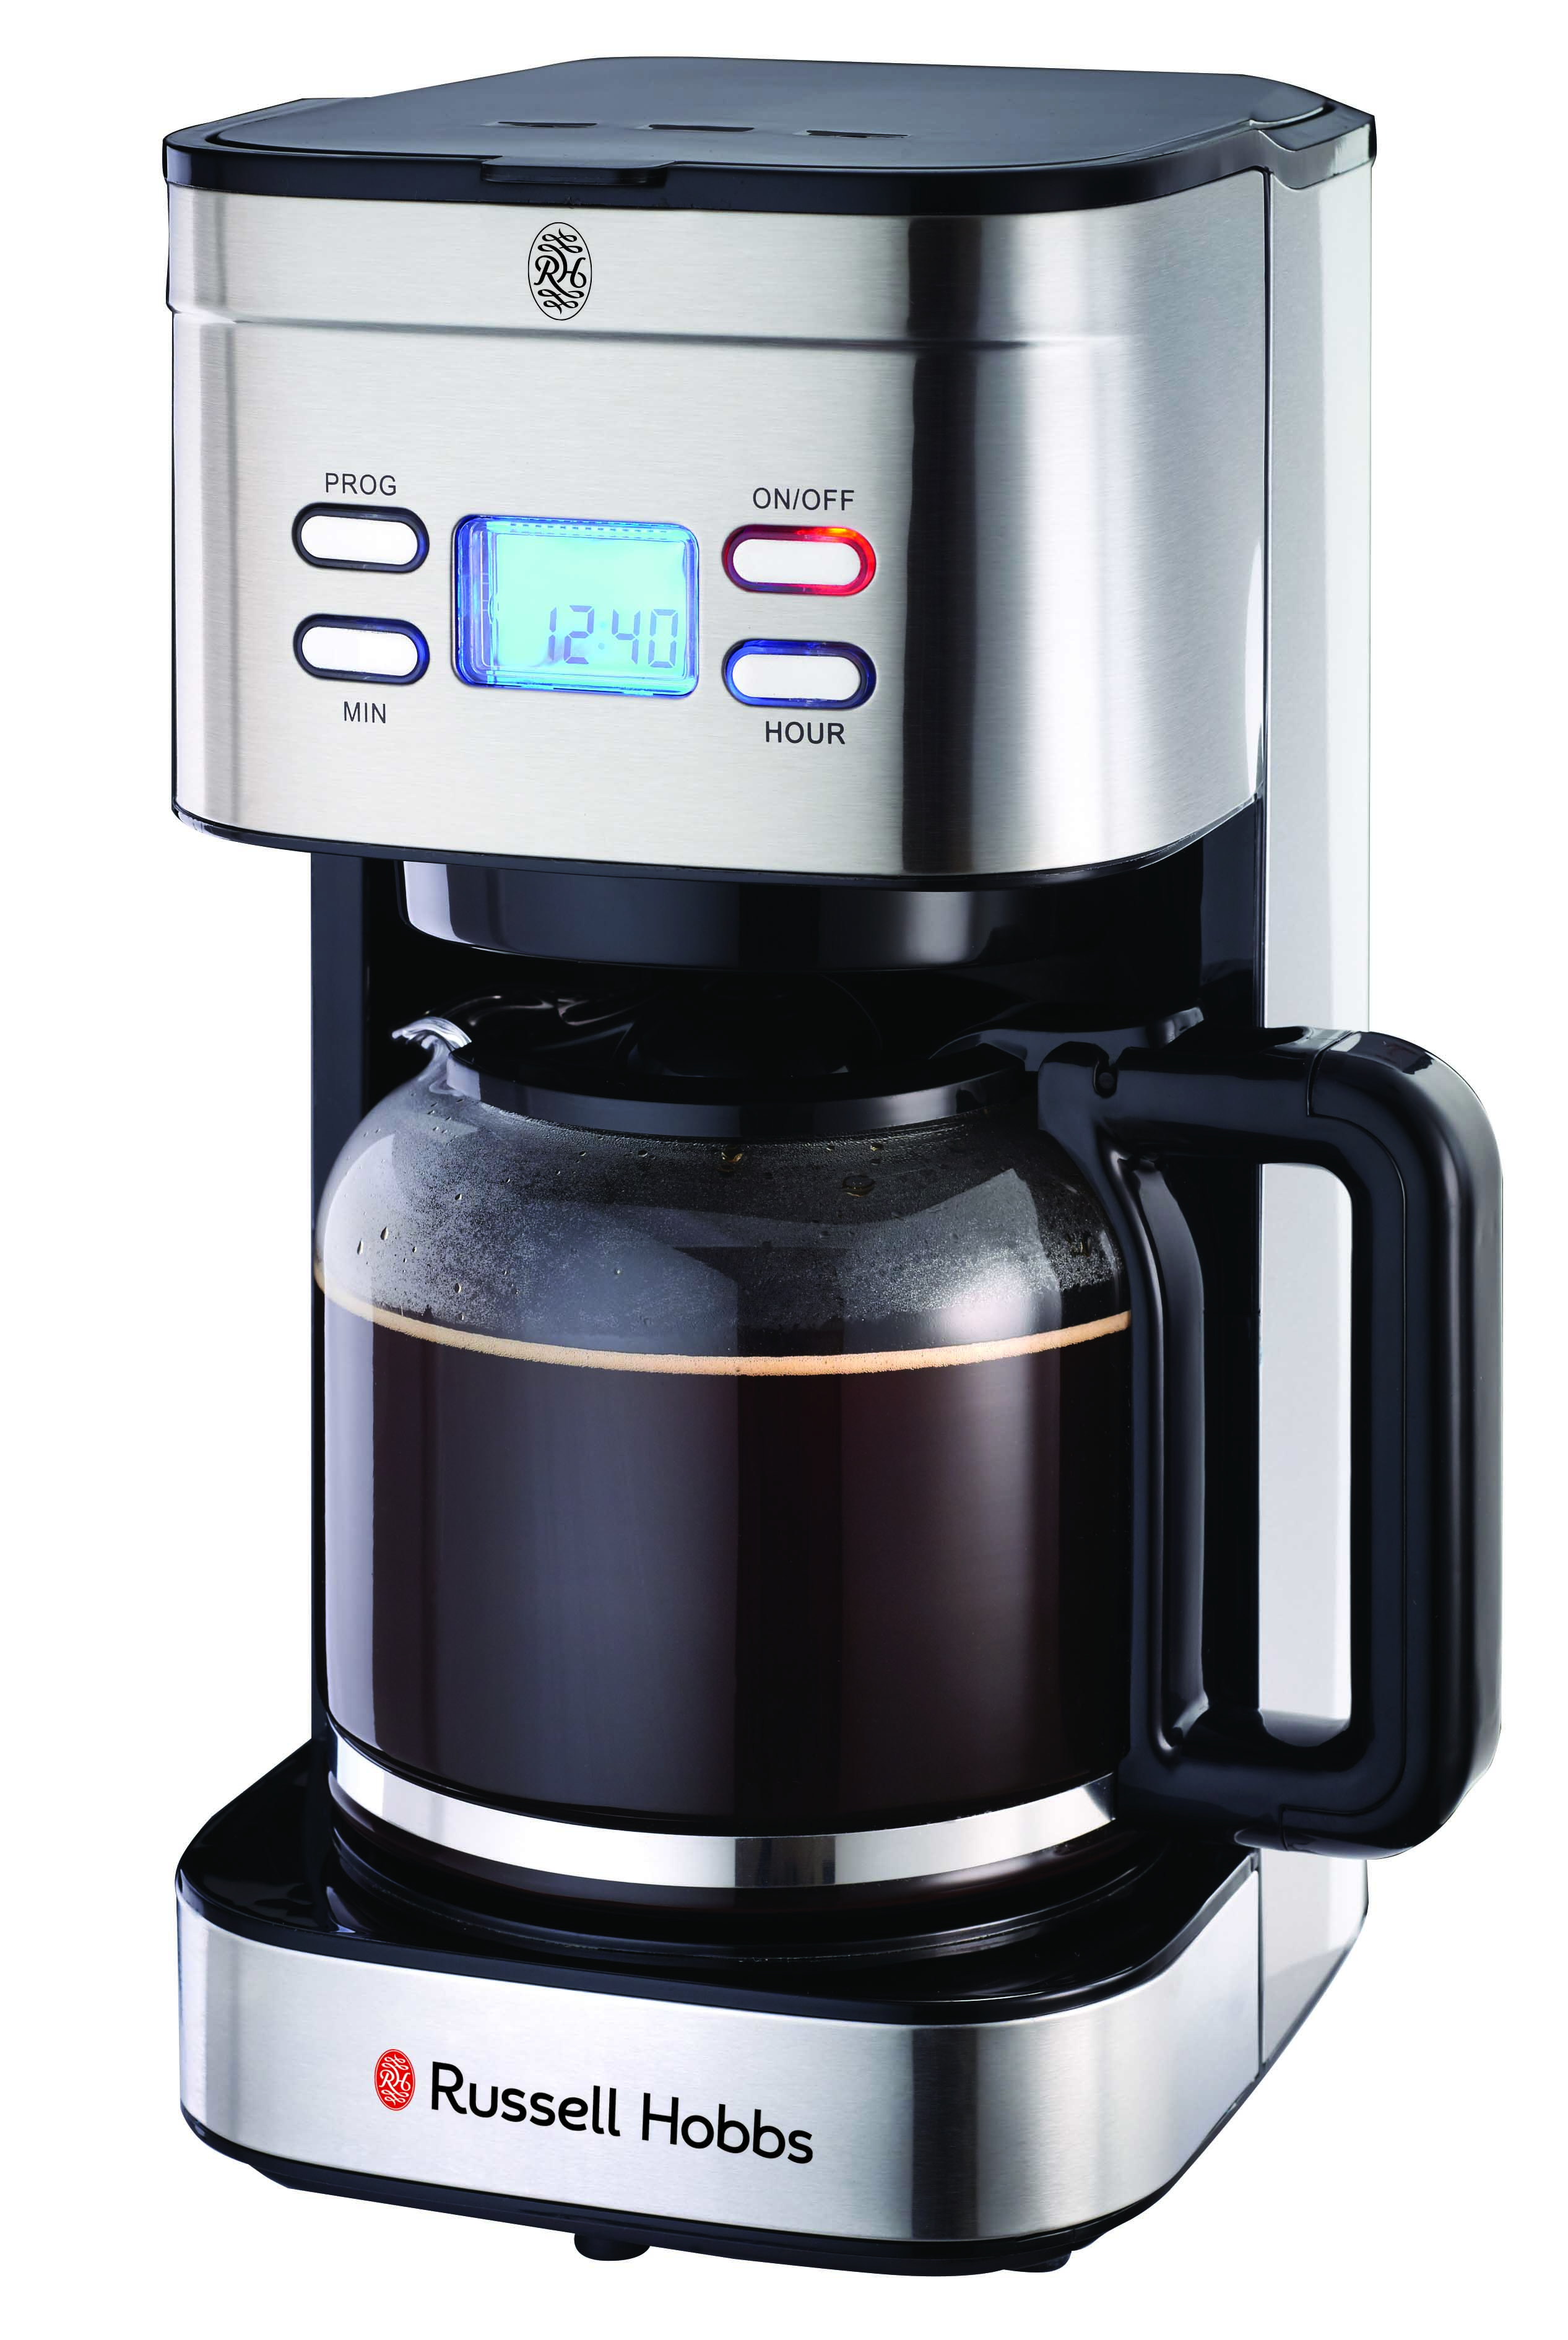 ELEGANCE DIGITAL FILTER COFFEE MAKER INSTRUCTIONS AND WARRANTY MODEL